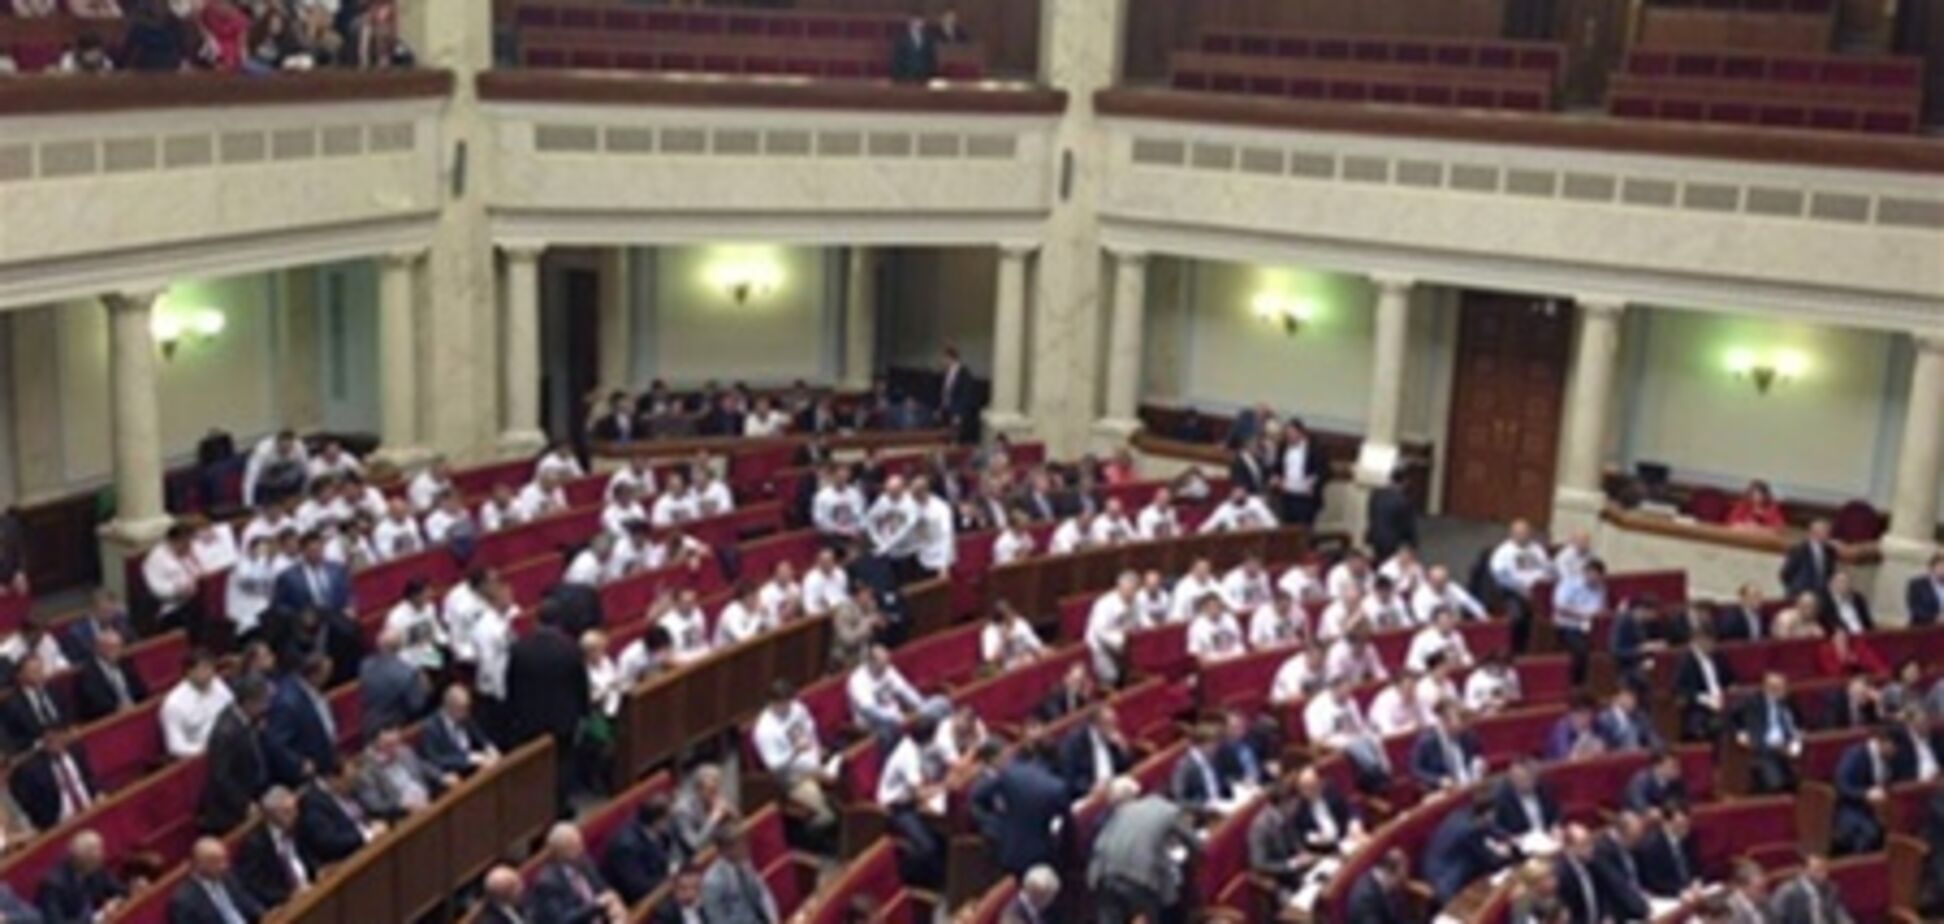 Януковича встретили скандированием 'Юле - волю!'